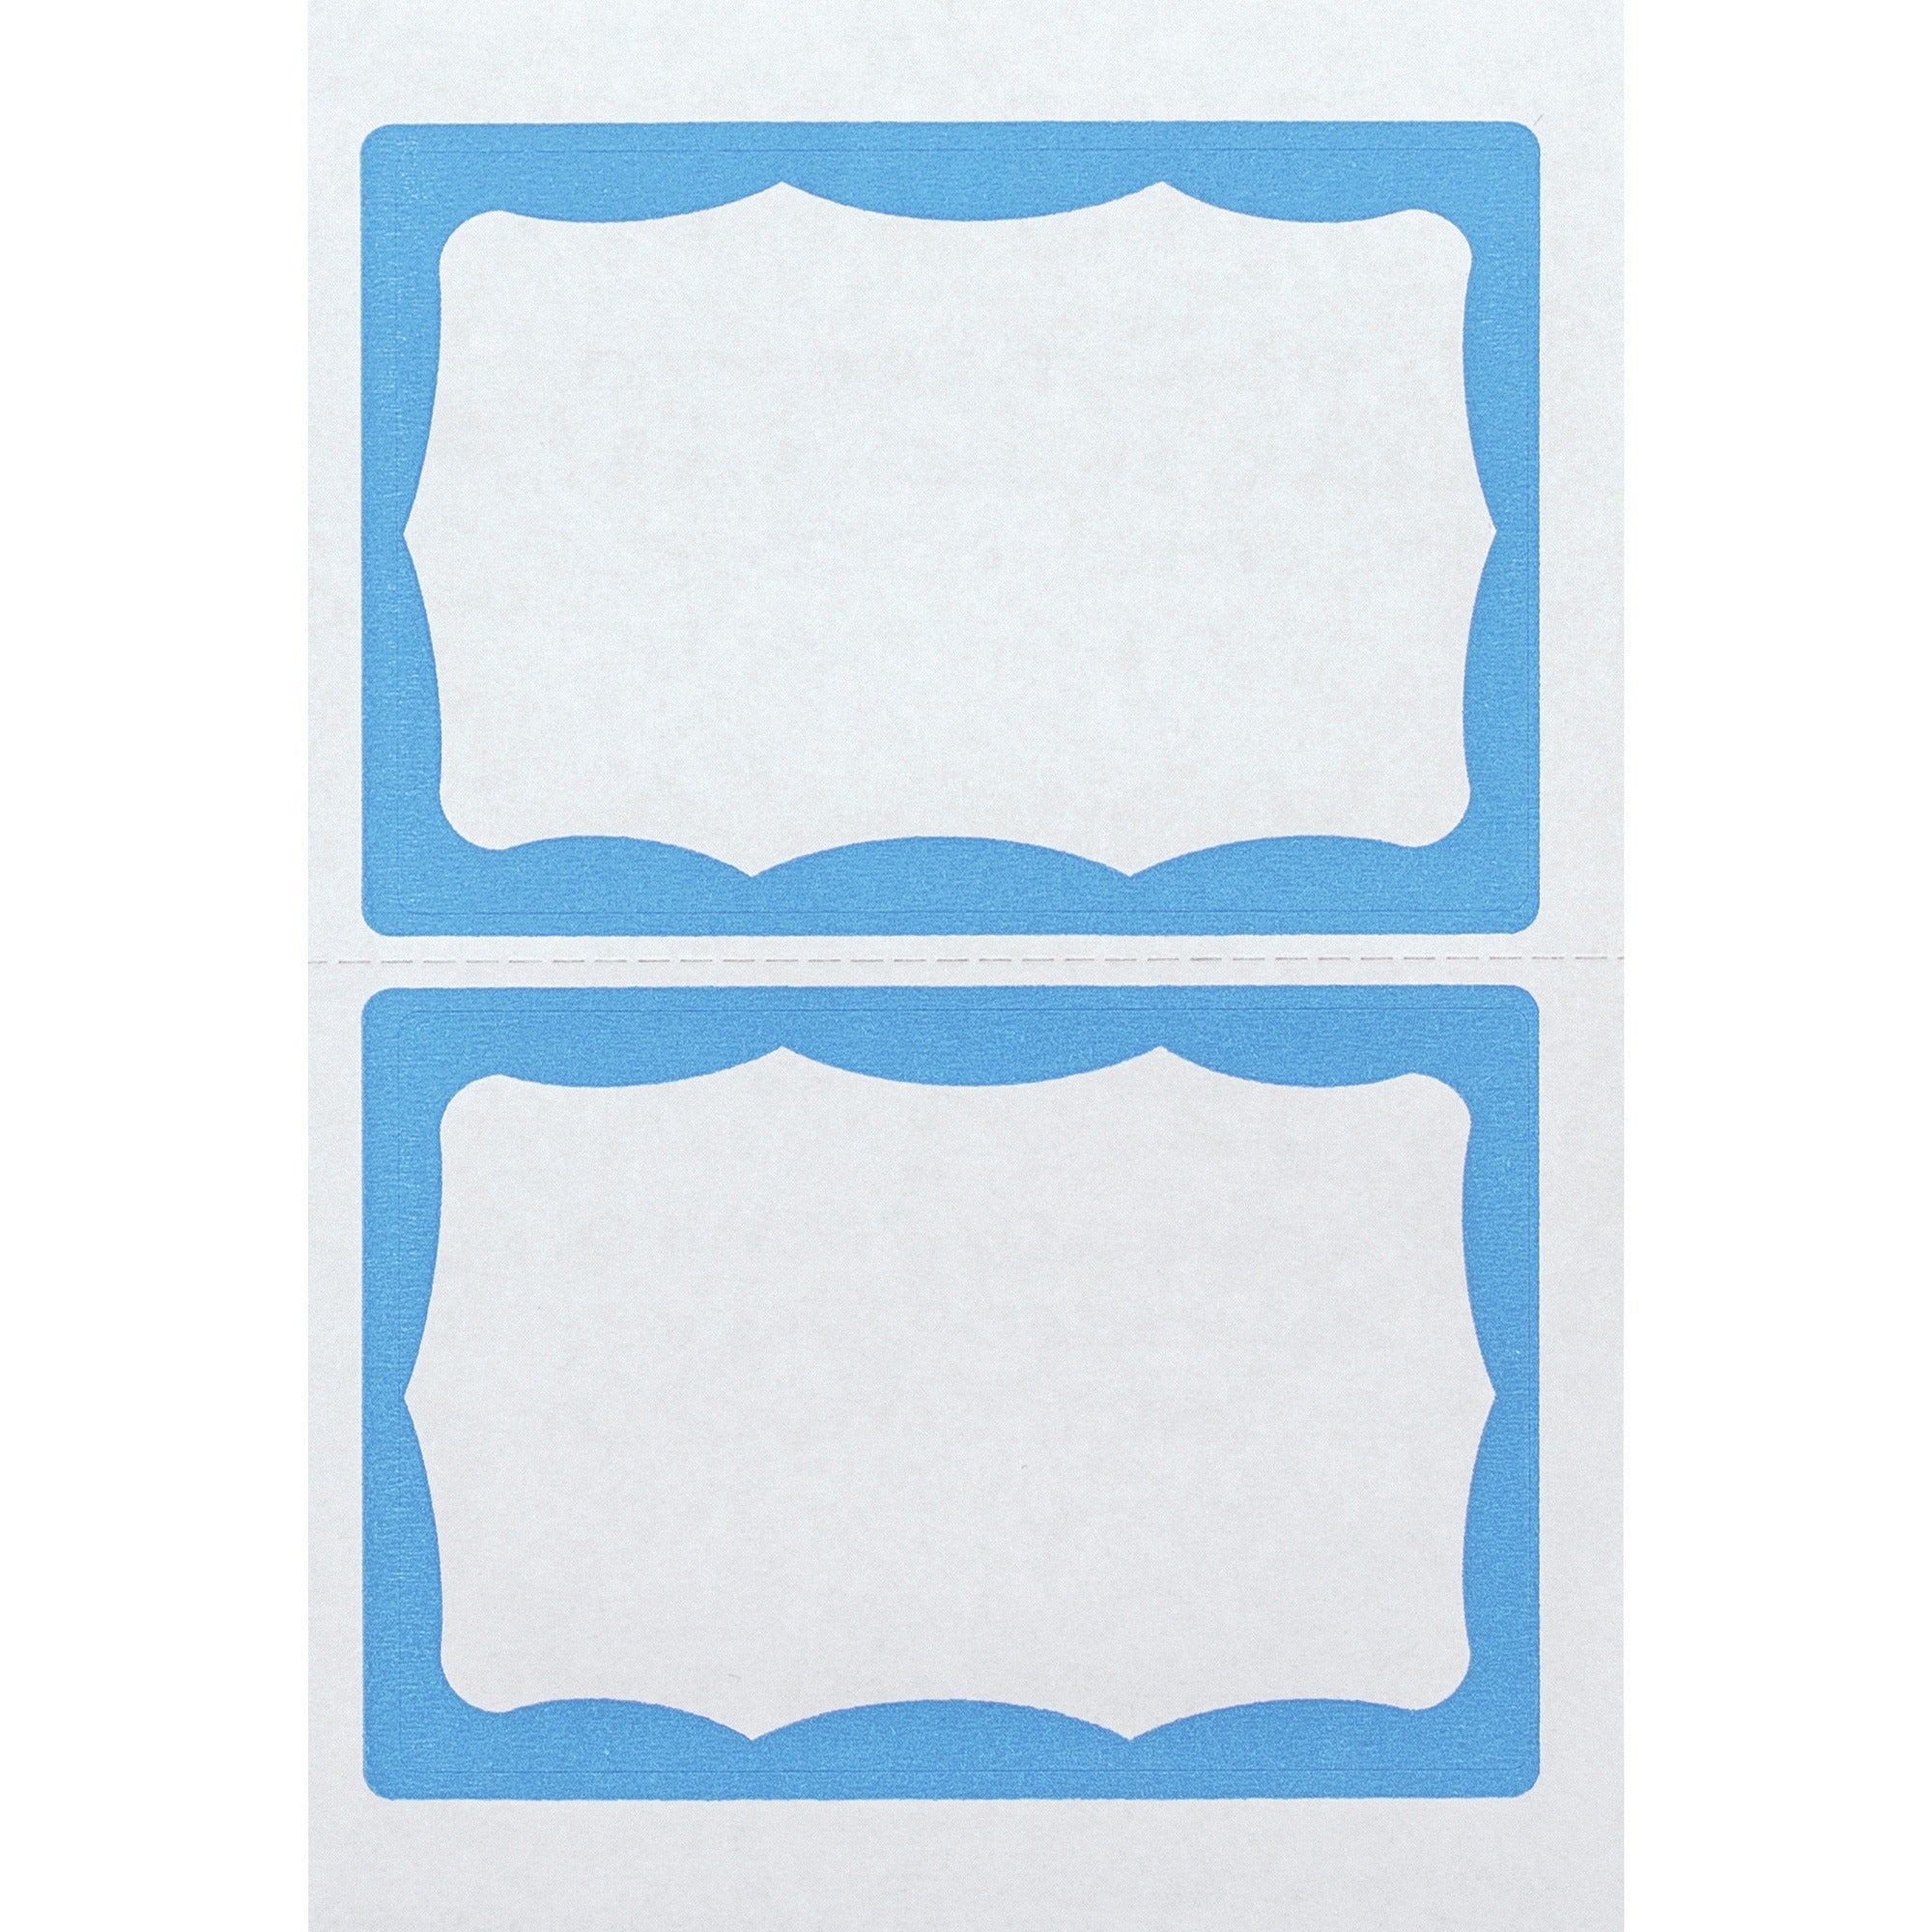 advantus-color-border-adhesive-name-badges-2-5-8-height-x-3-3-4-width-removable-adhesive-rectangle-white-blue-100-box_avt97048 - 1